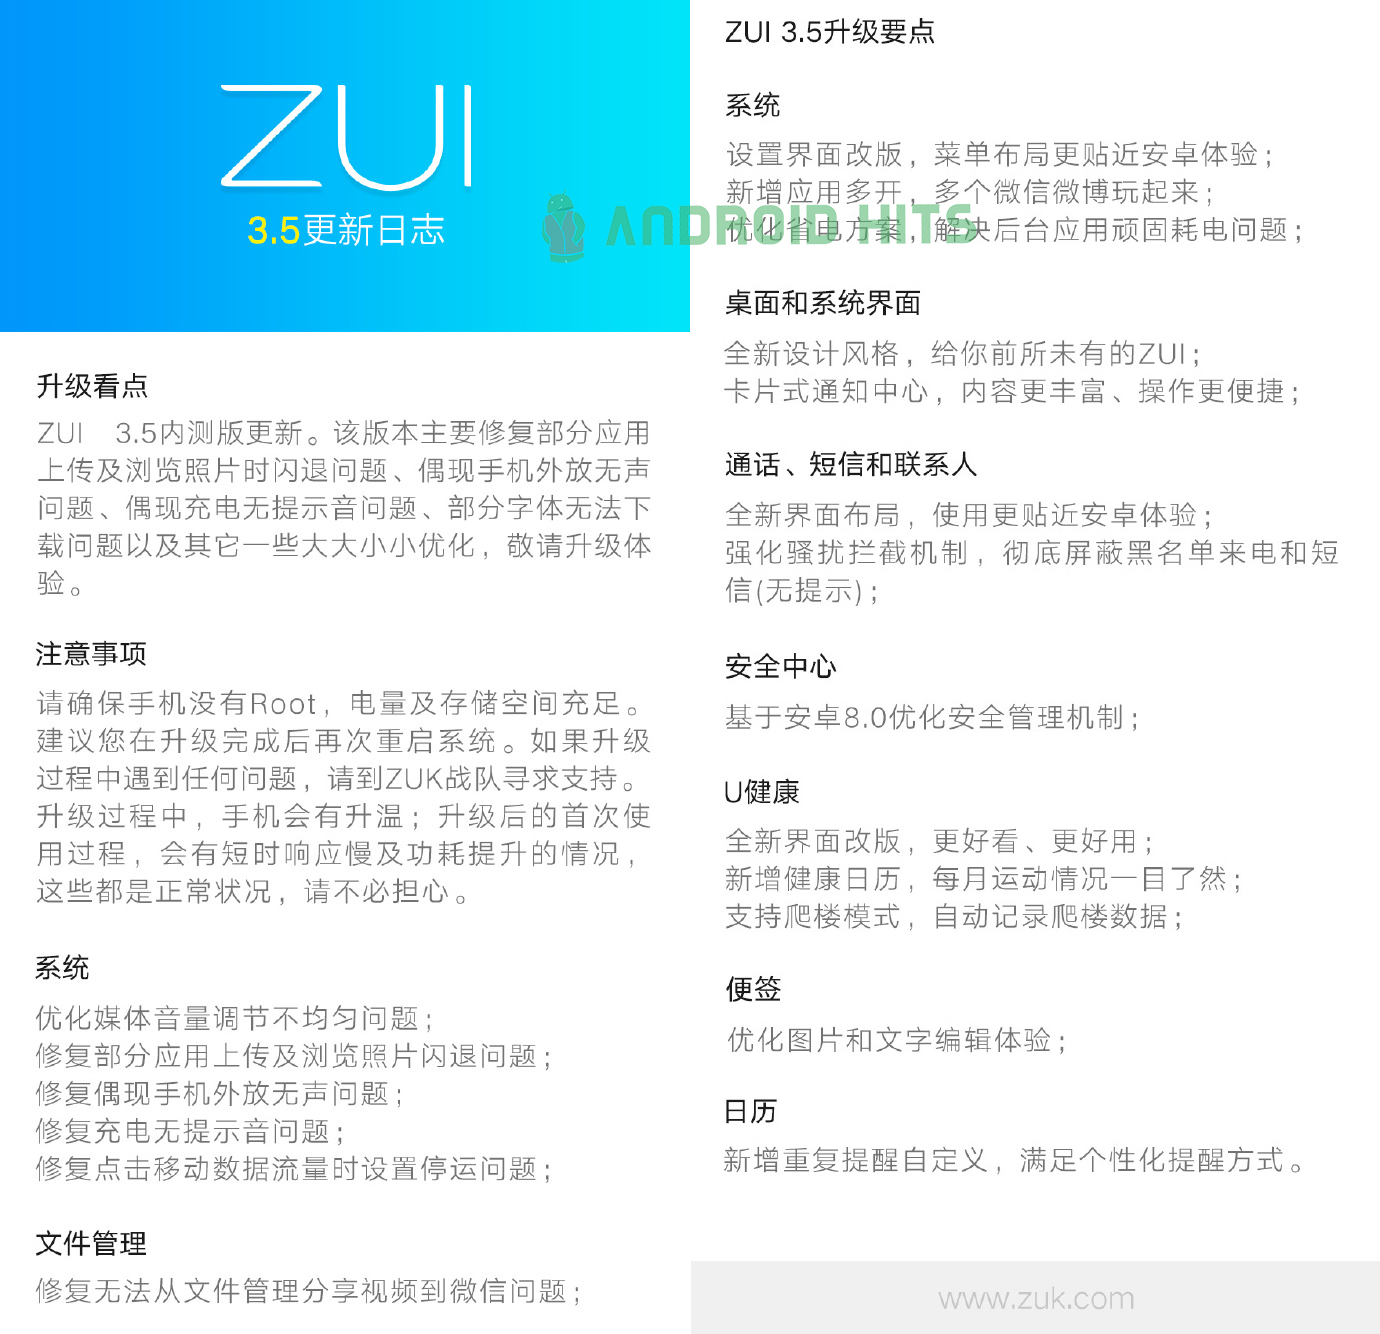 Lenovo ZUK Z2 Pro receives Android 8.0 Oreo with ZUI 3.5 2